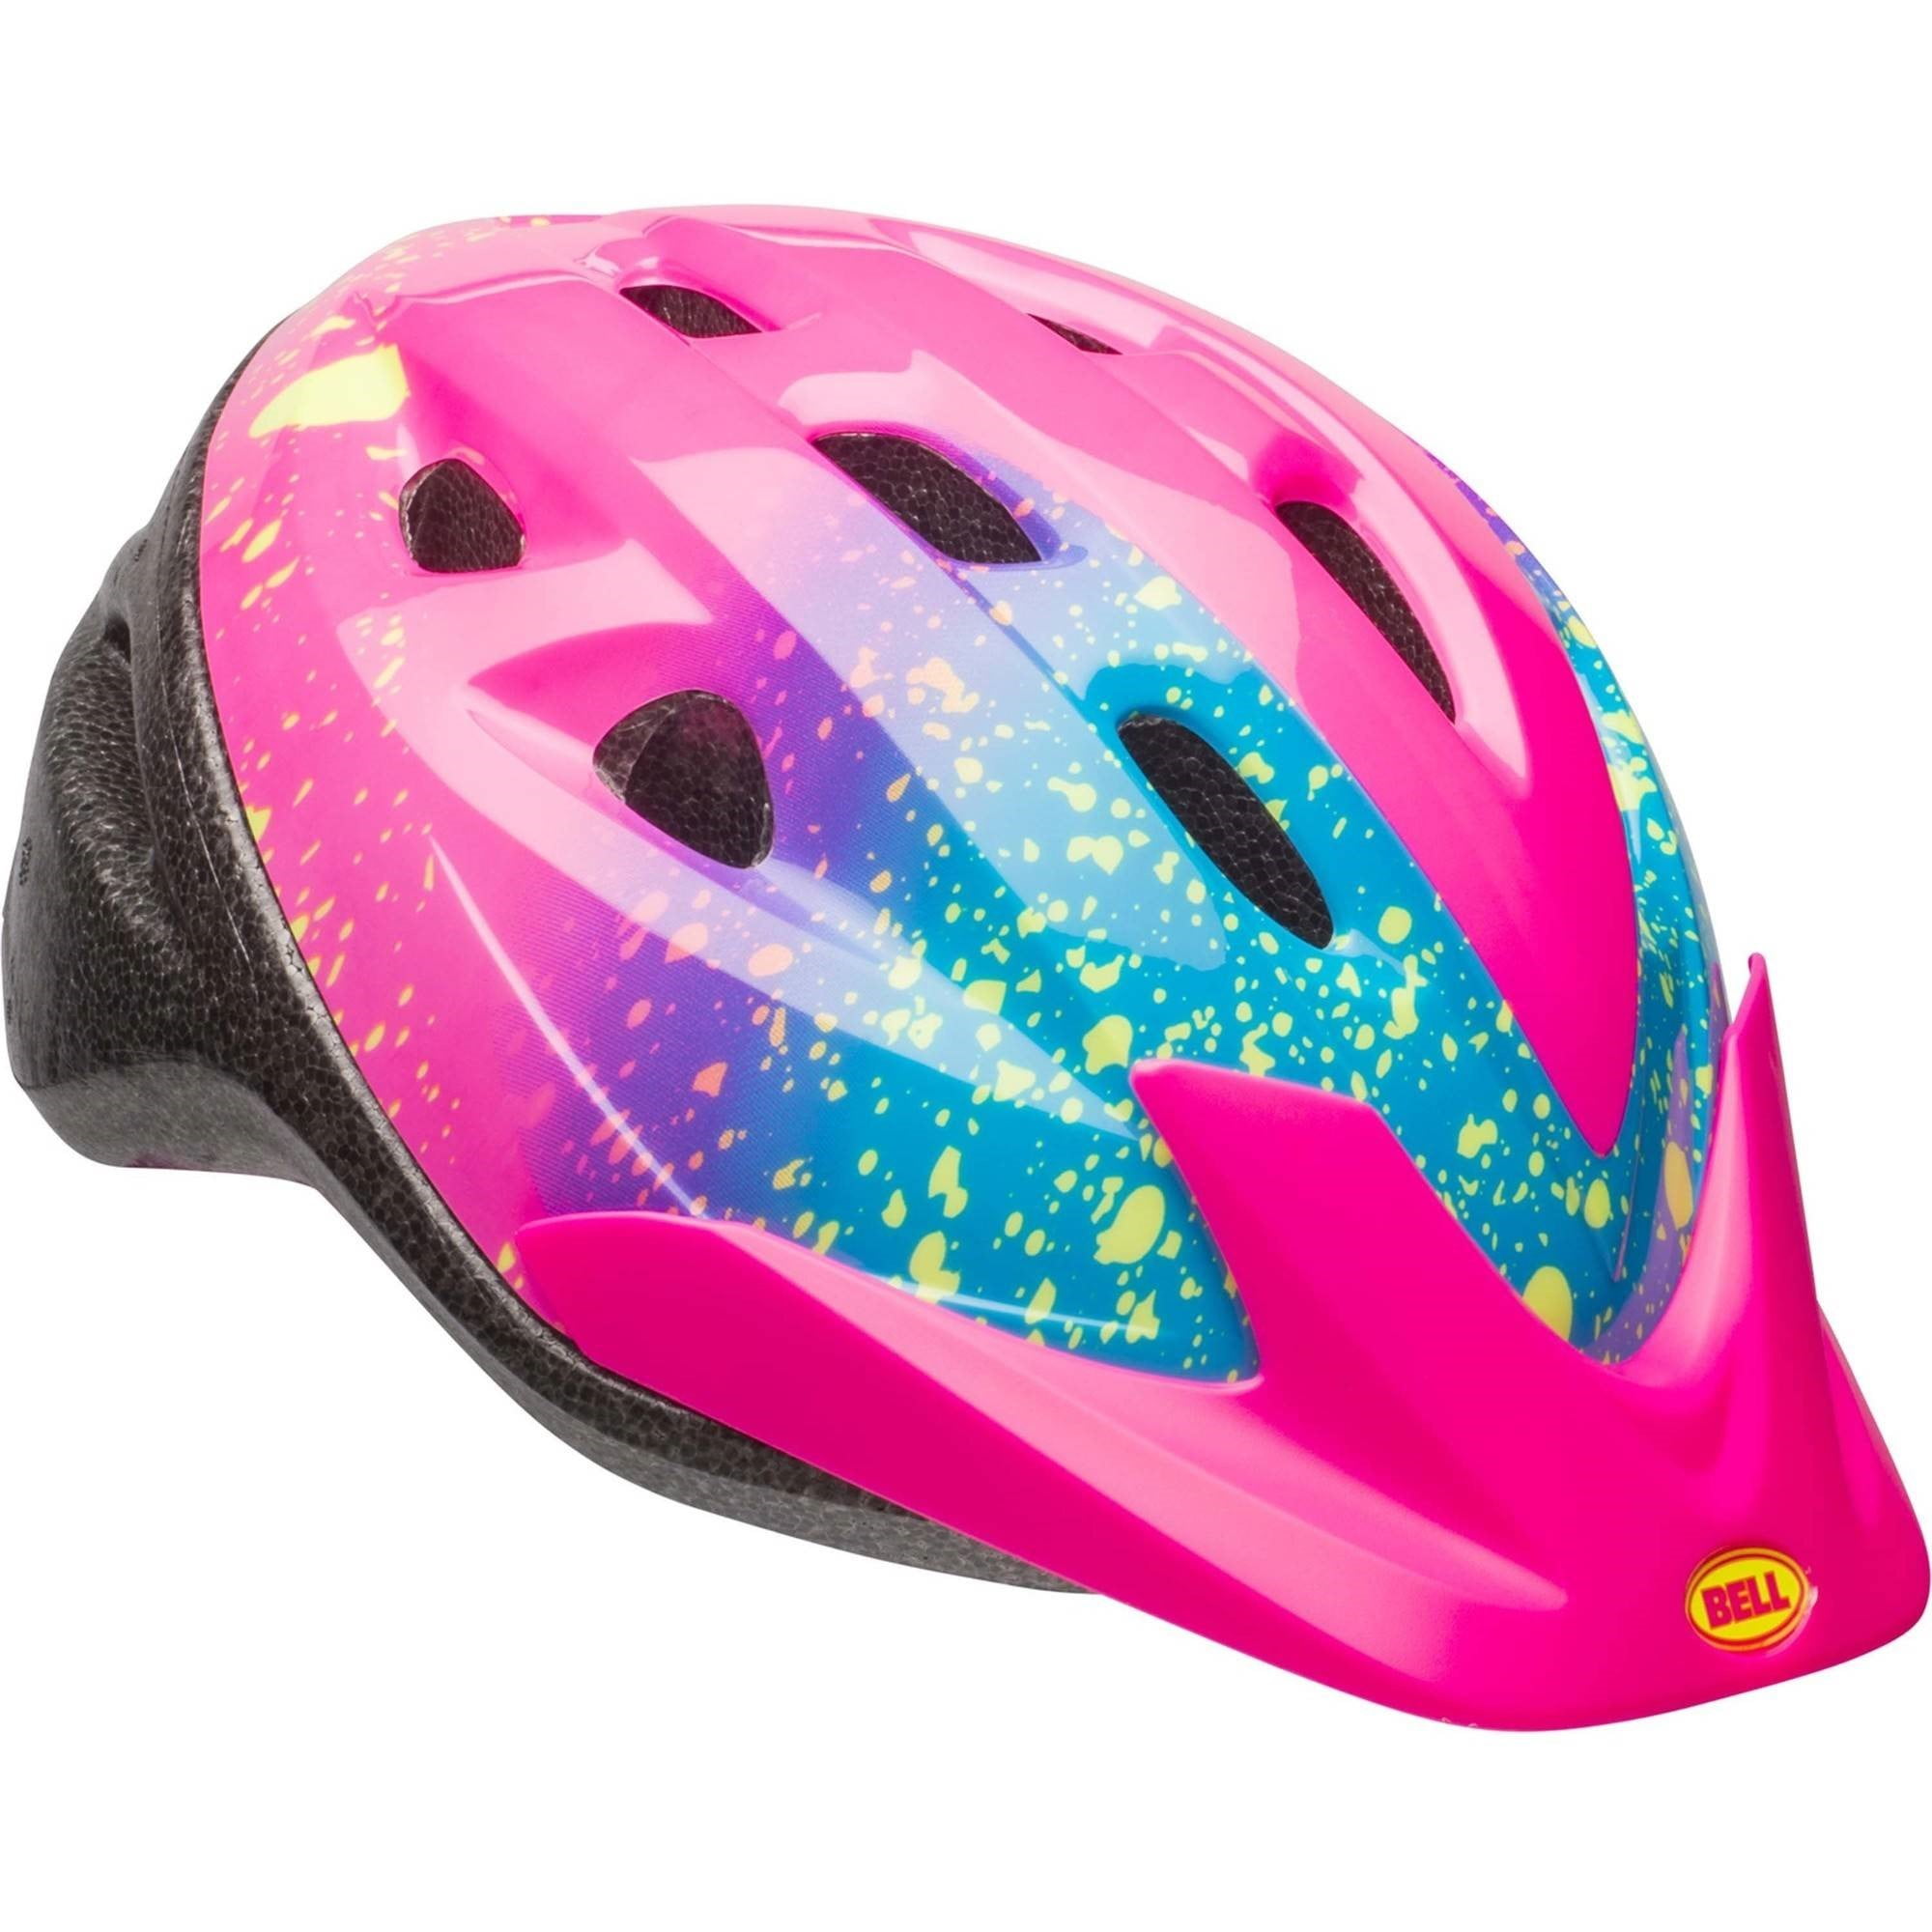 Details about   Disney Junior Minnie Mouse Polka Dot Pink Bicycle Bike Toddler Helmet 3 48-52cm 